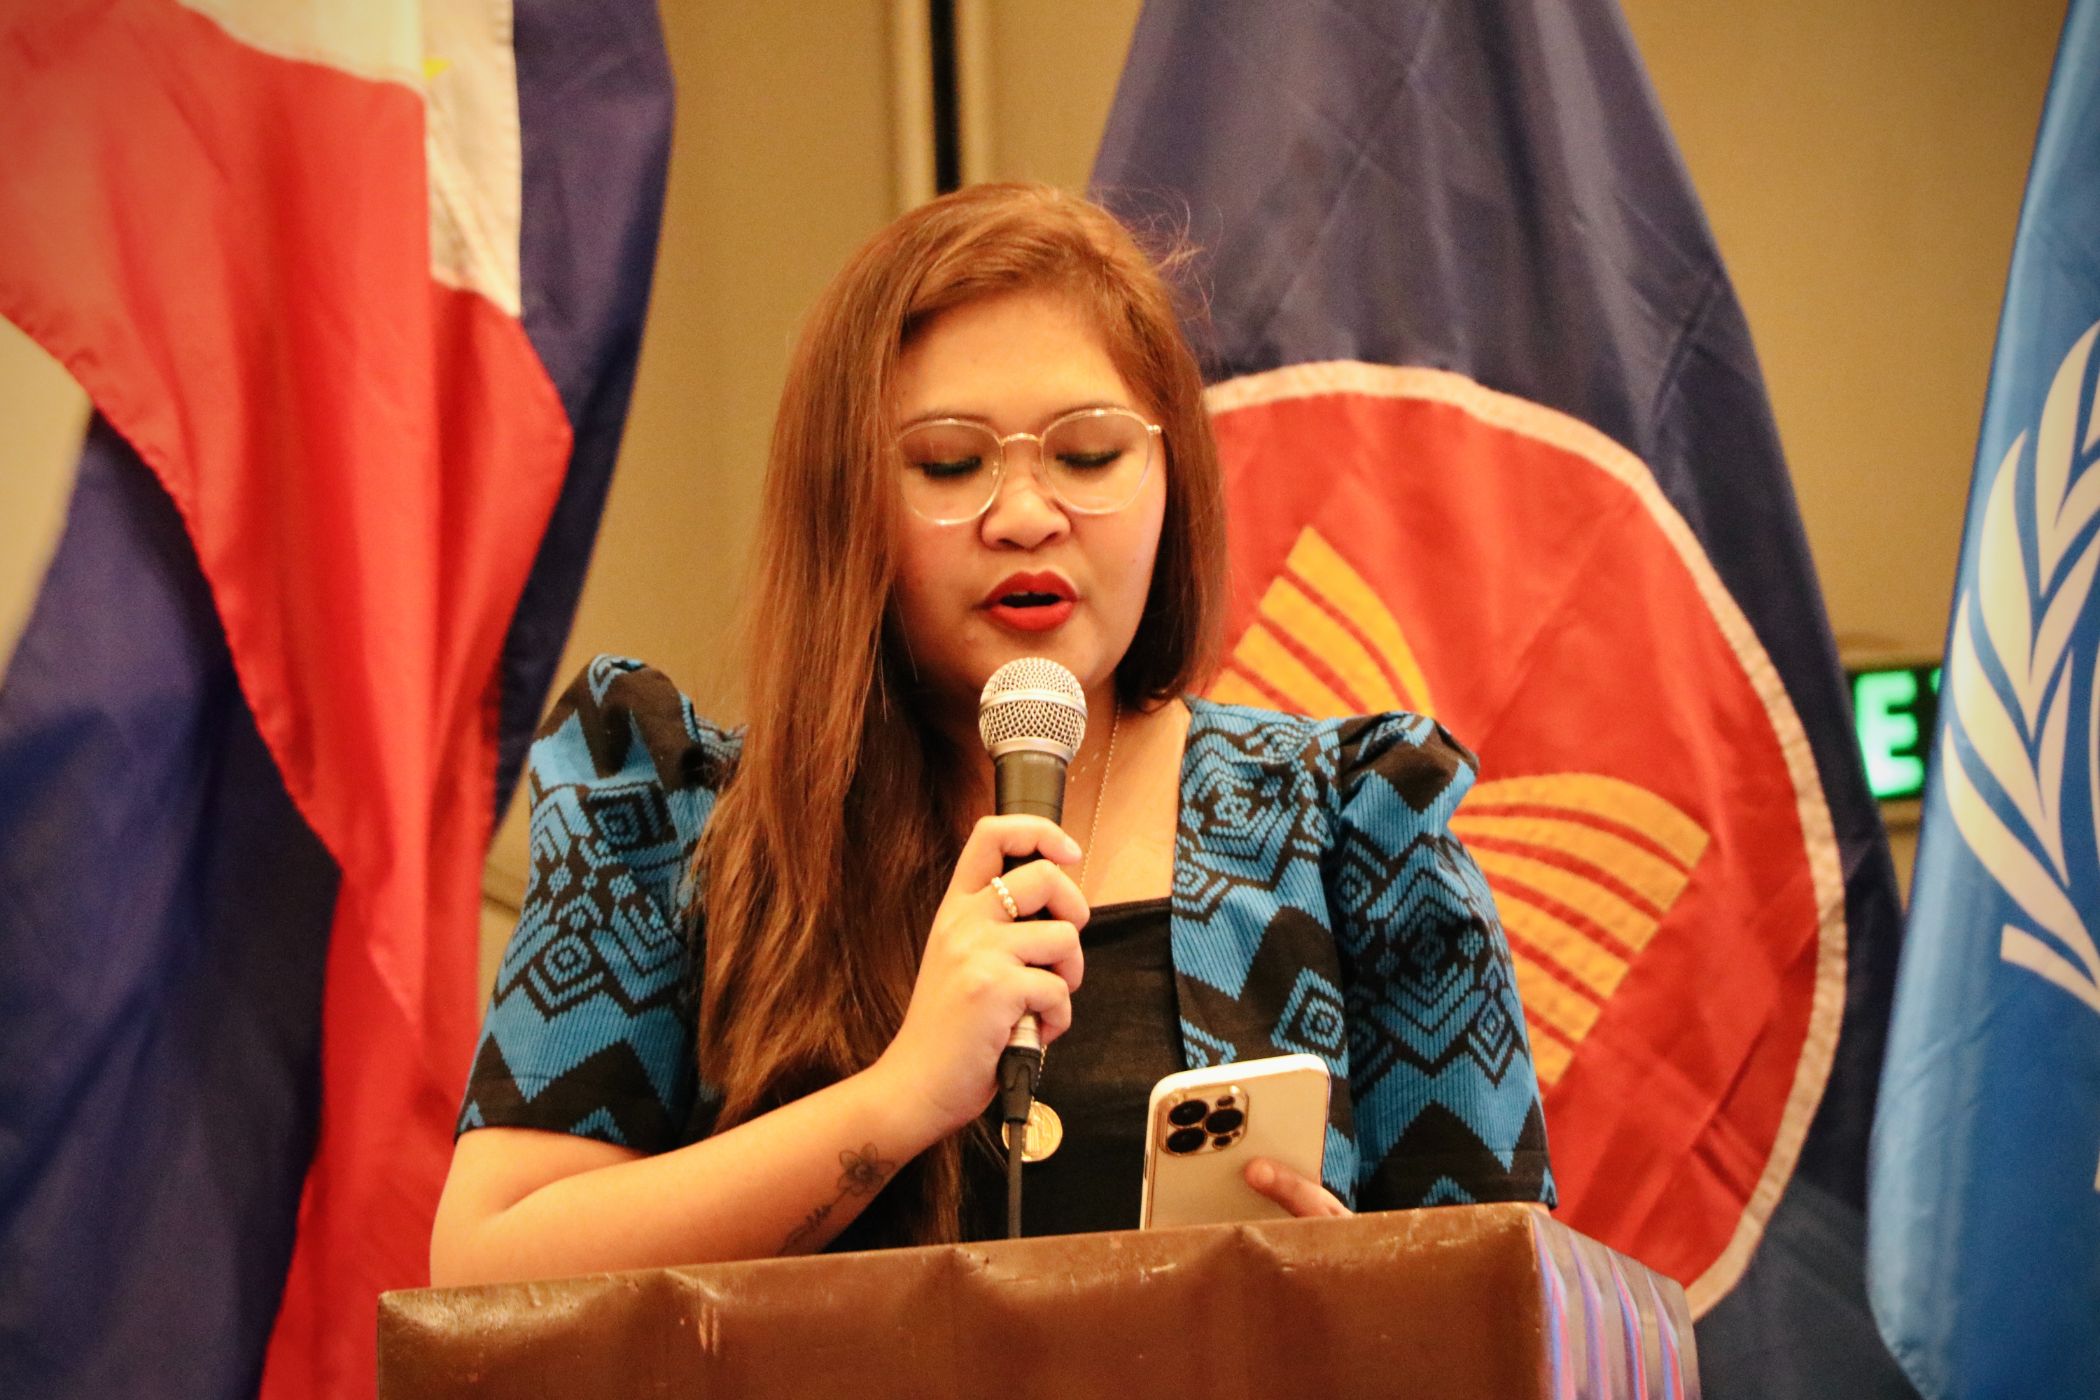 Commissioner Representing Mindanao Alexa Danielle Dayanghirang